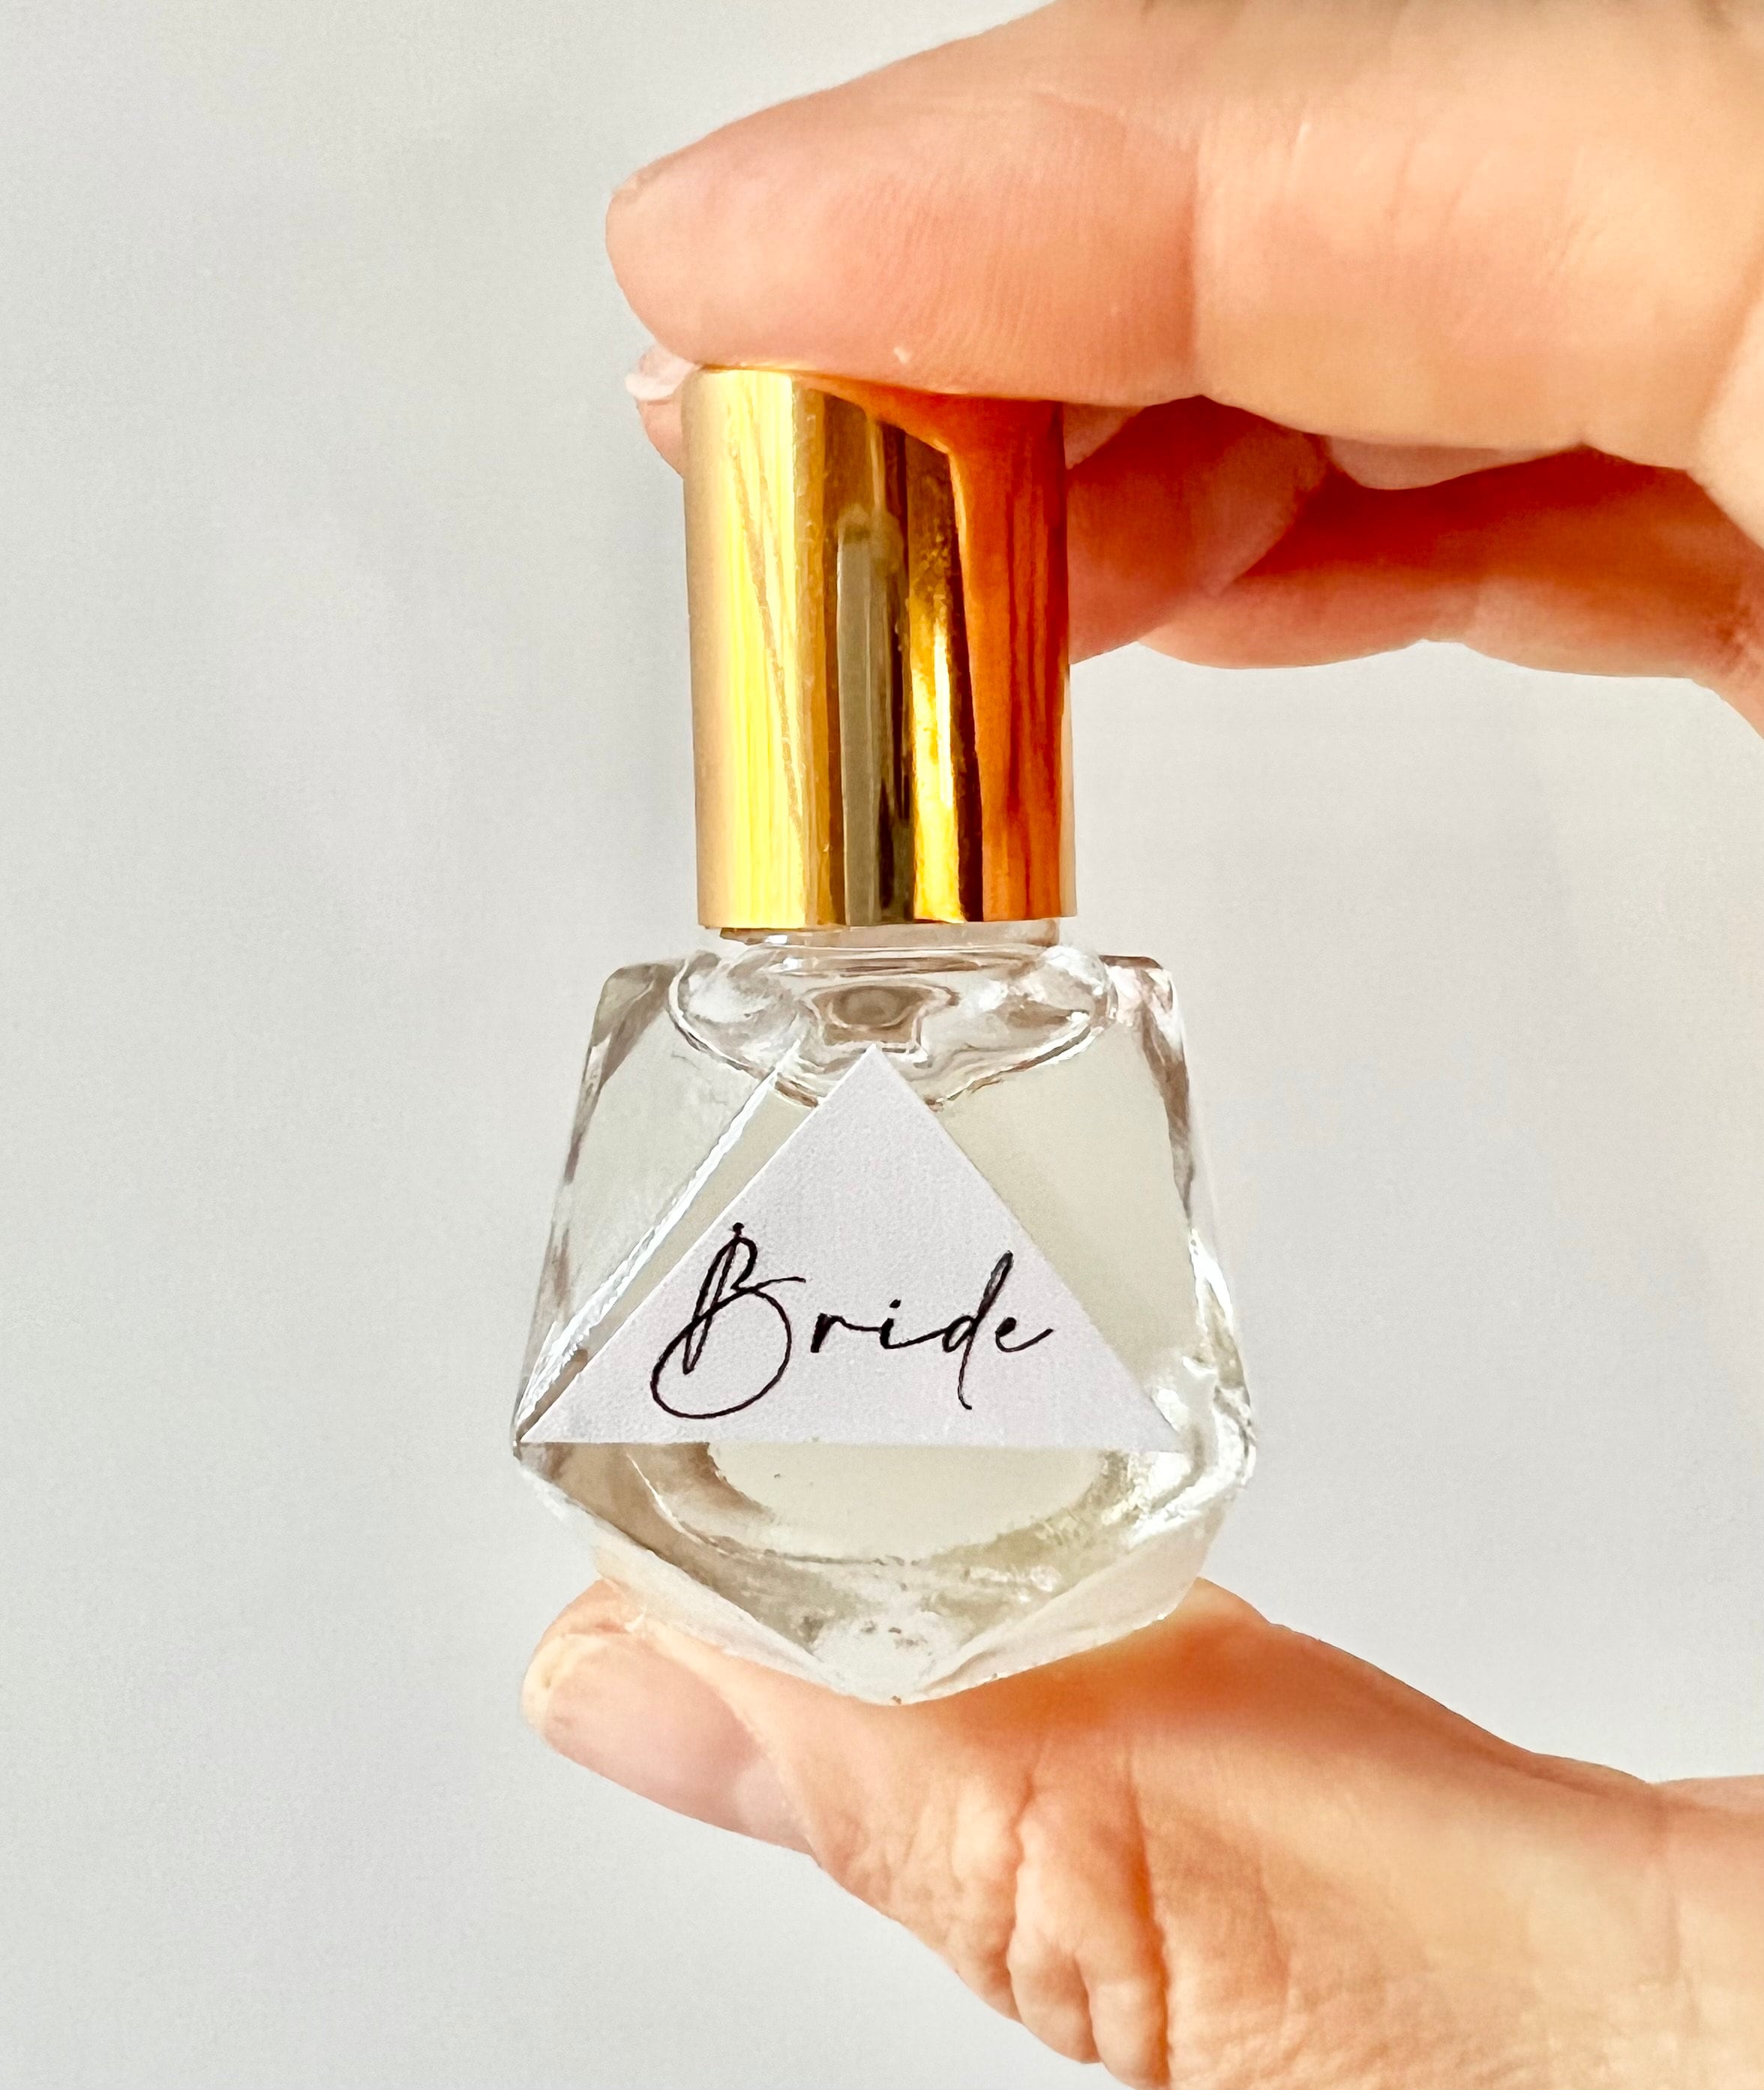 CLEARANCE Mini Perfume Bottle Cabochons | Assorted Miniature Eau de Parfum  | Dollhouse Craft Supplies | Kawaii Resin Cabochon (4 pcs / 11mm x 17mm)